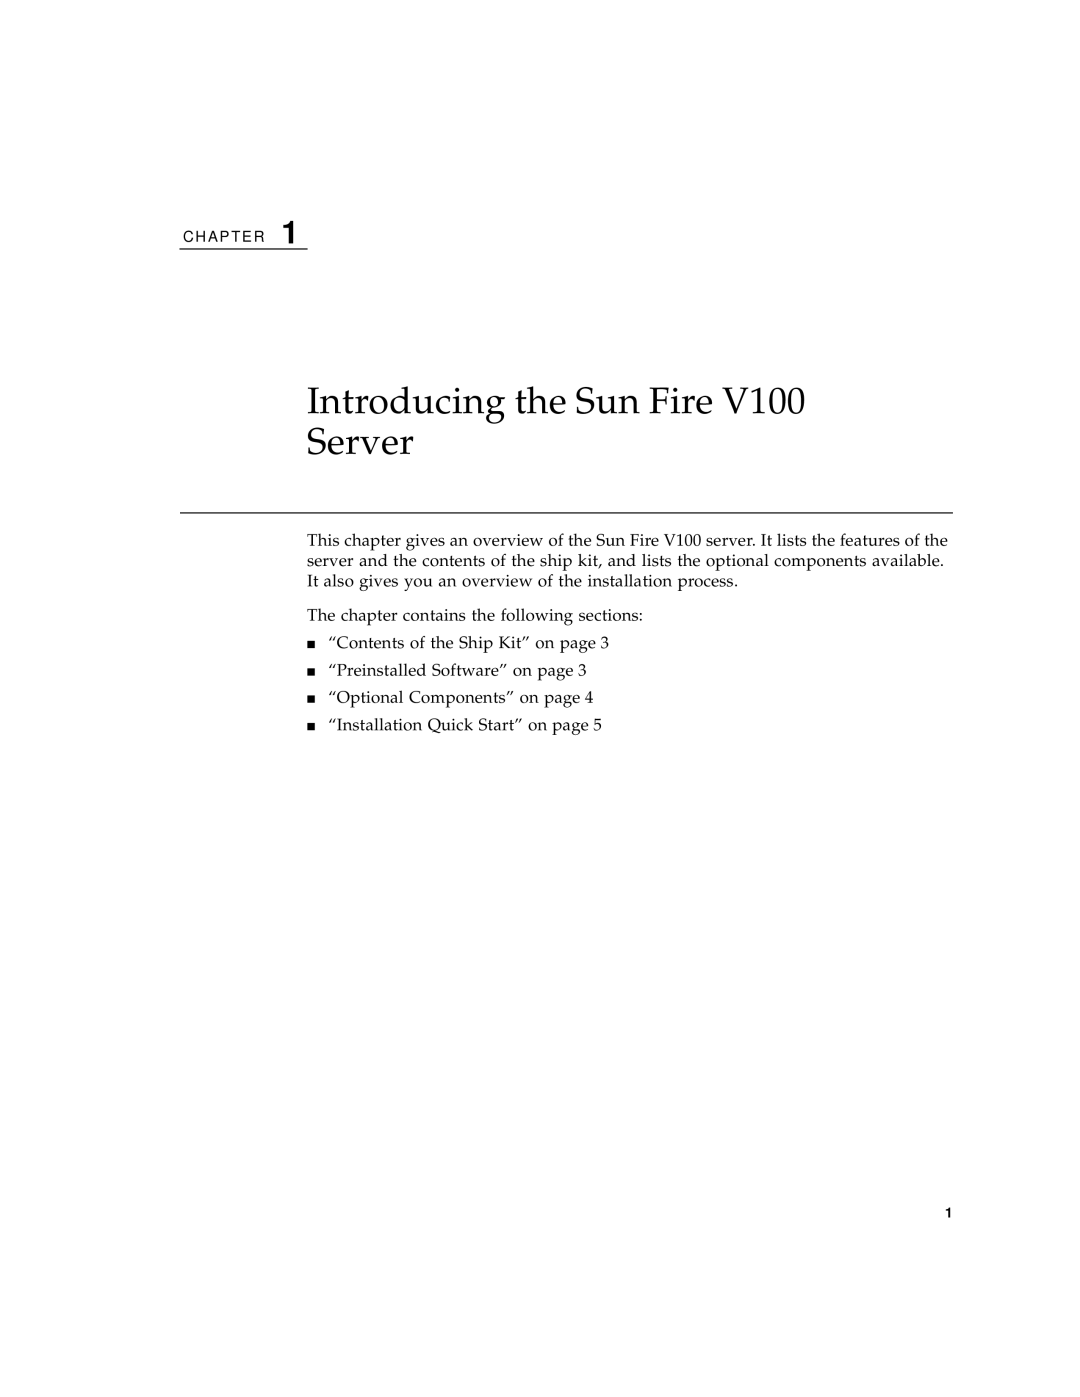 Sun Microsystems Sun Fire V100 manual Introducing the Sun Fire Server 